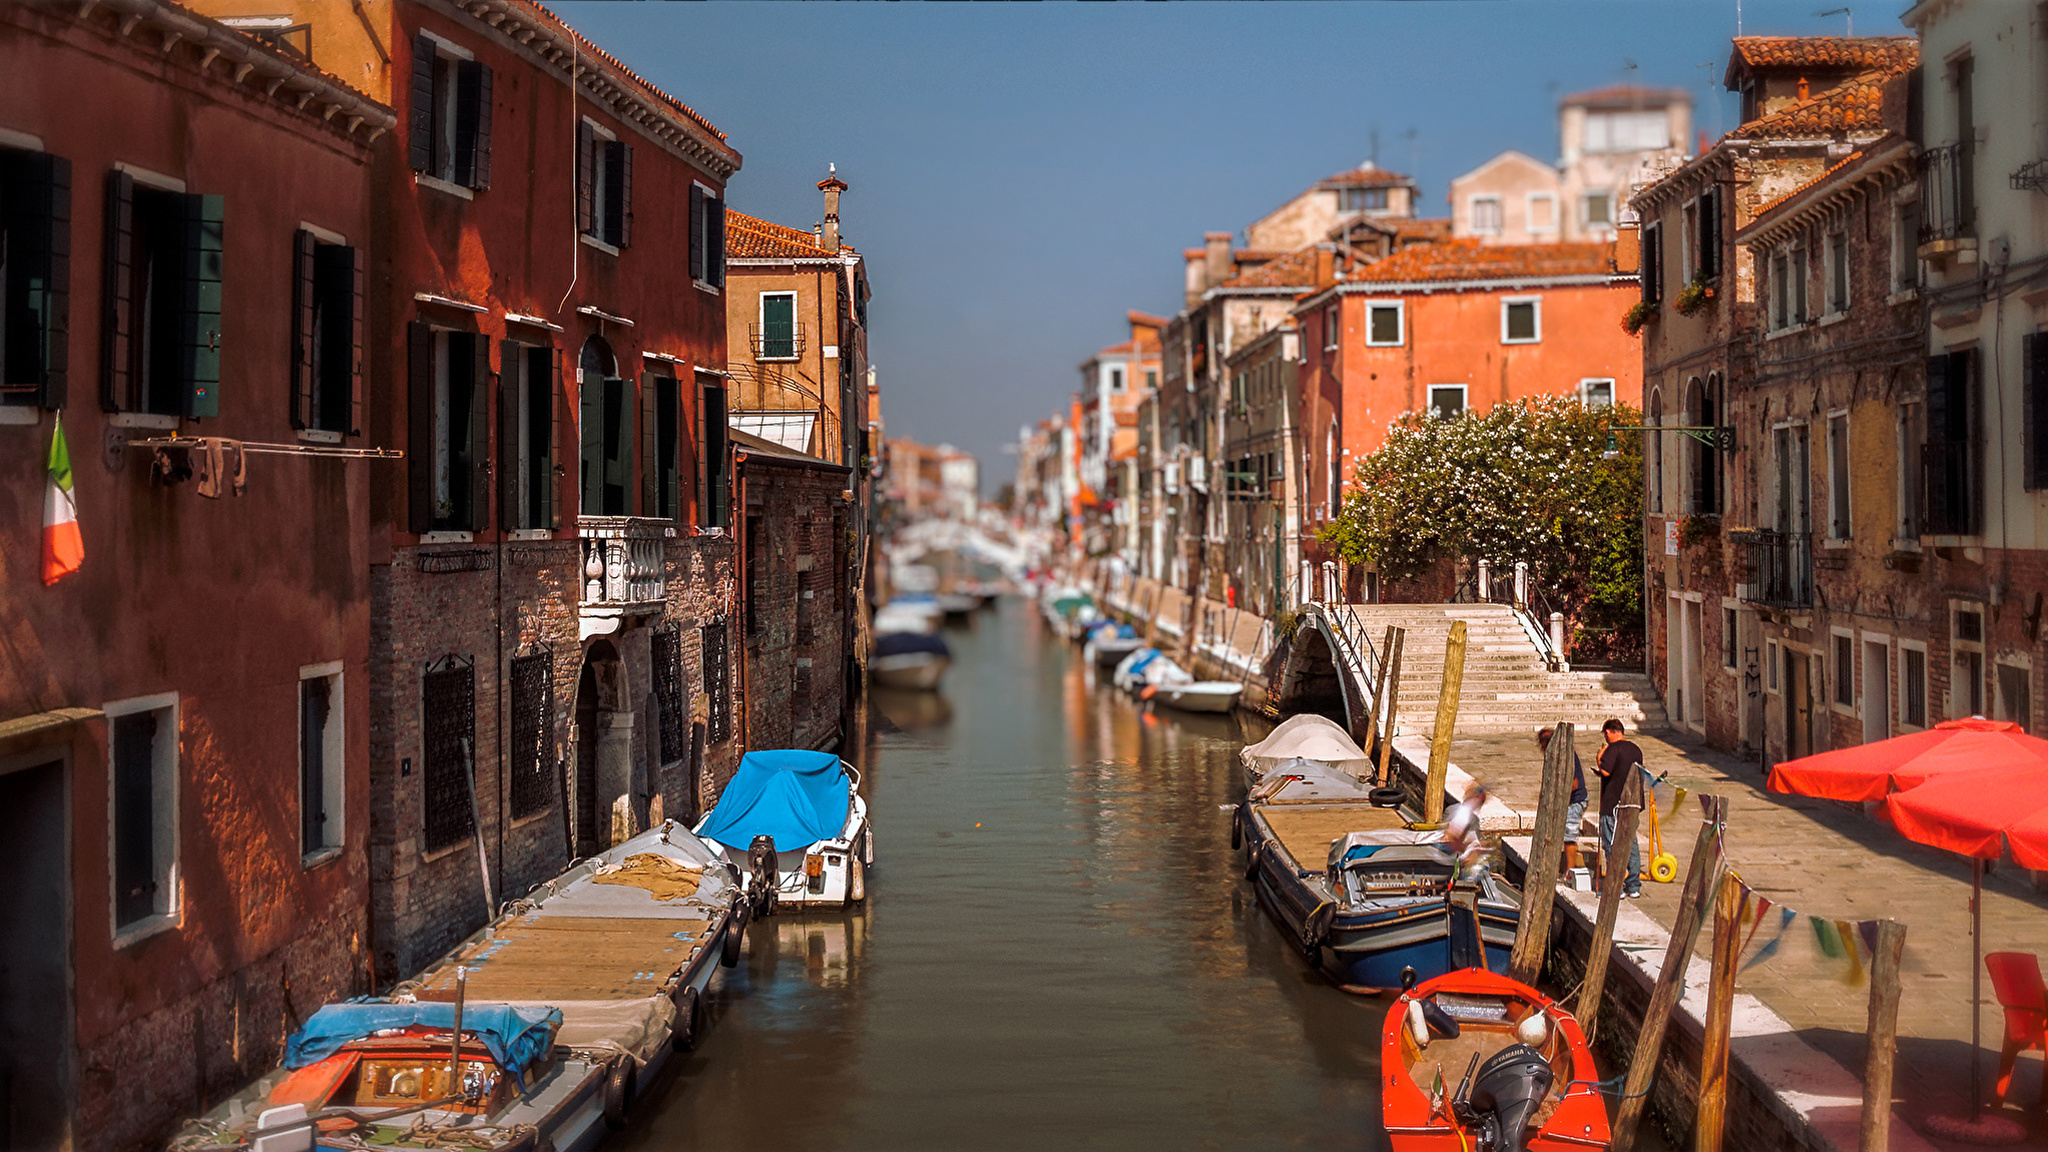 Street river. Венеция Италия улочки. Италия каналы Венеции. Венеция итальянская улочка. Италия Венеция улицы.